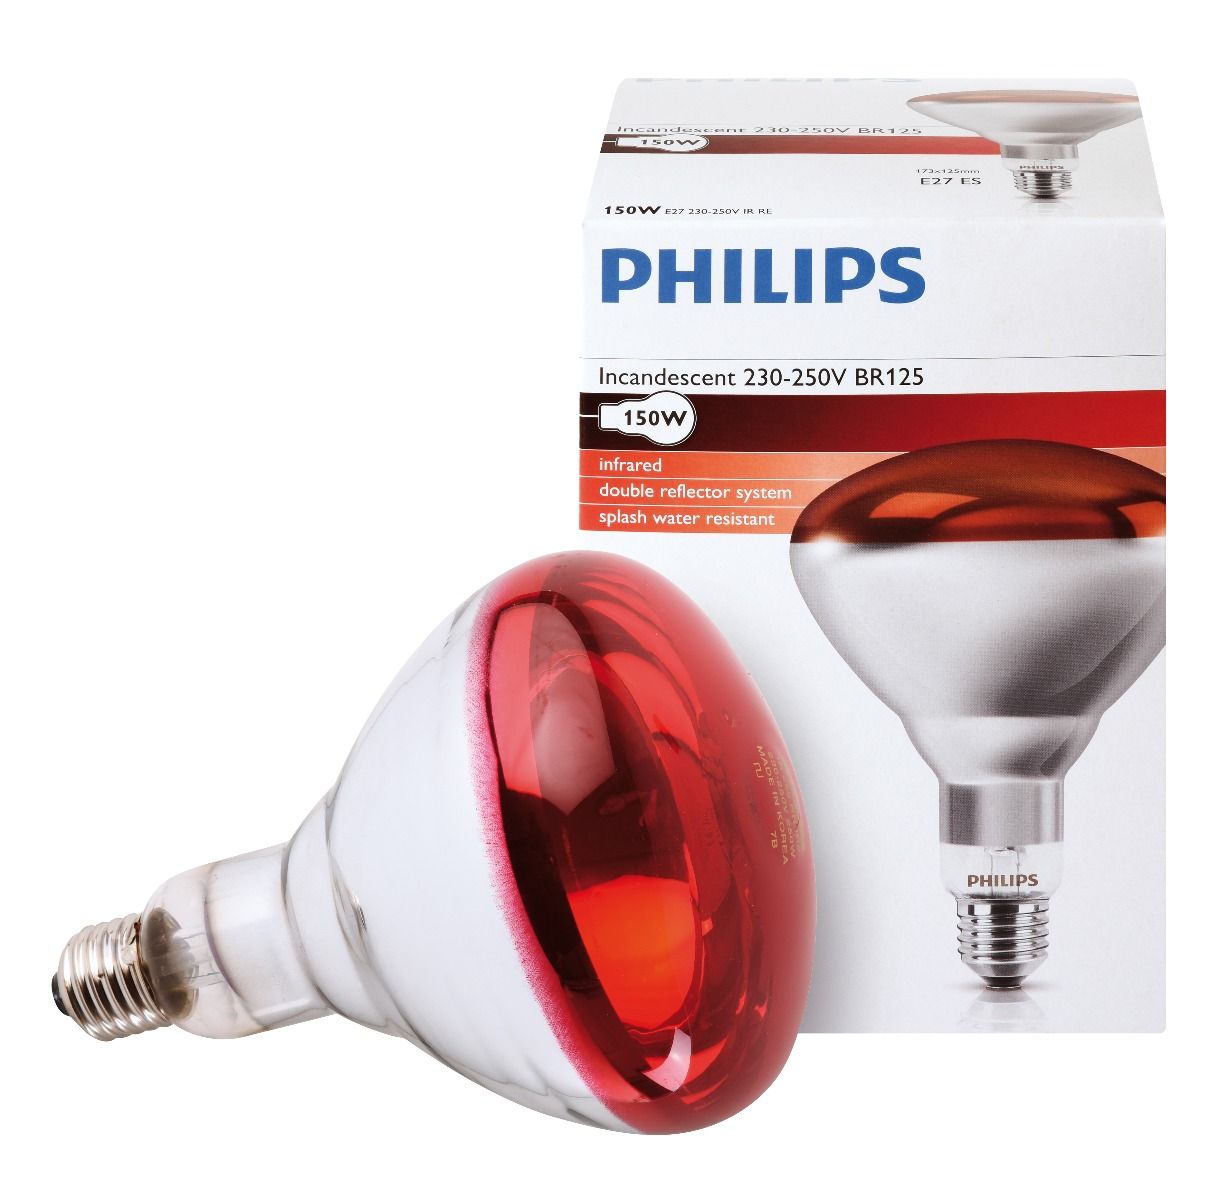 Лампа инфракрасная Philips ir 250w. Лампа инфракрасная Philips par38 ir 250w e27 красная. Лампа накаливания инфракрасная зеркальная Philips br125 ir 150w e27 230-250v Red 1ct/10. Патрон для инфракрасной лампы Philips br125 ir 150w e27 230 v Red. Филипс 150